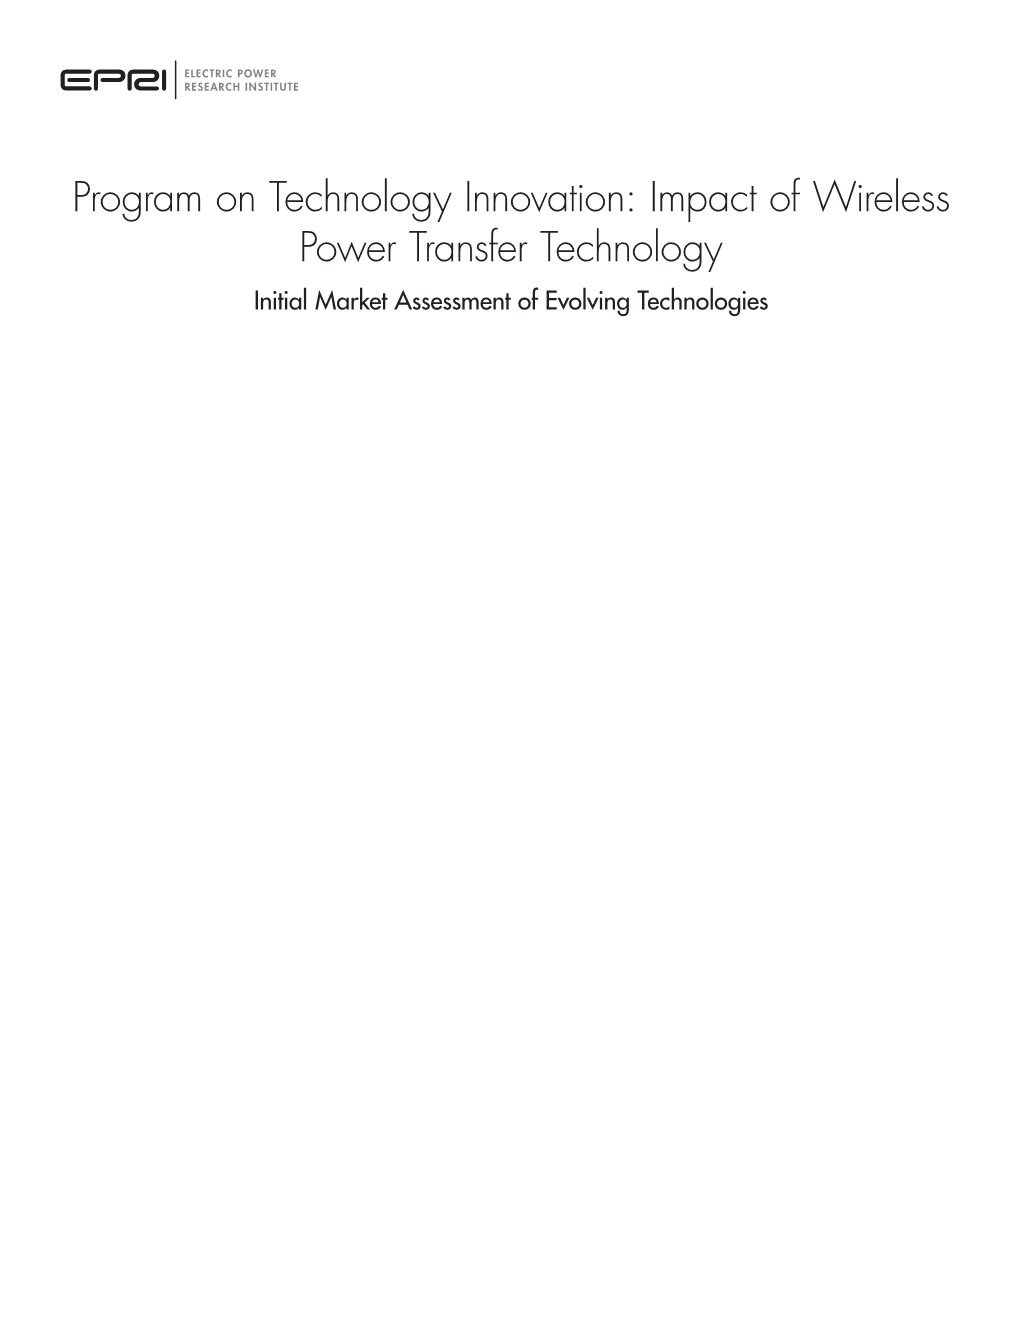 Program on Technology Innovation: Impact of Wireless Power Transfer Technology Initial Market Assessment of Evolving Technologies